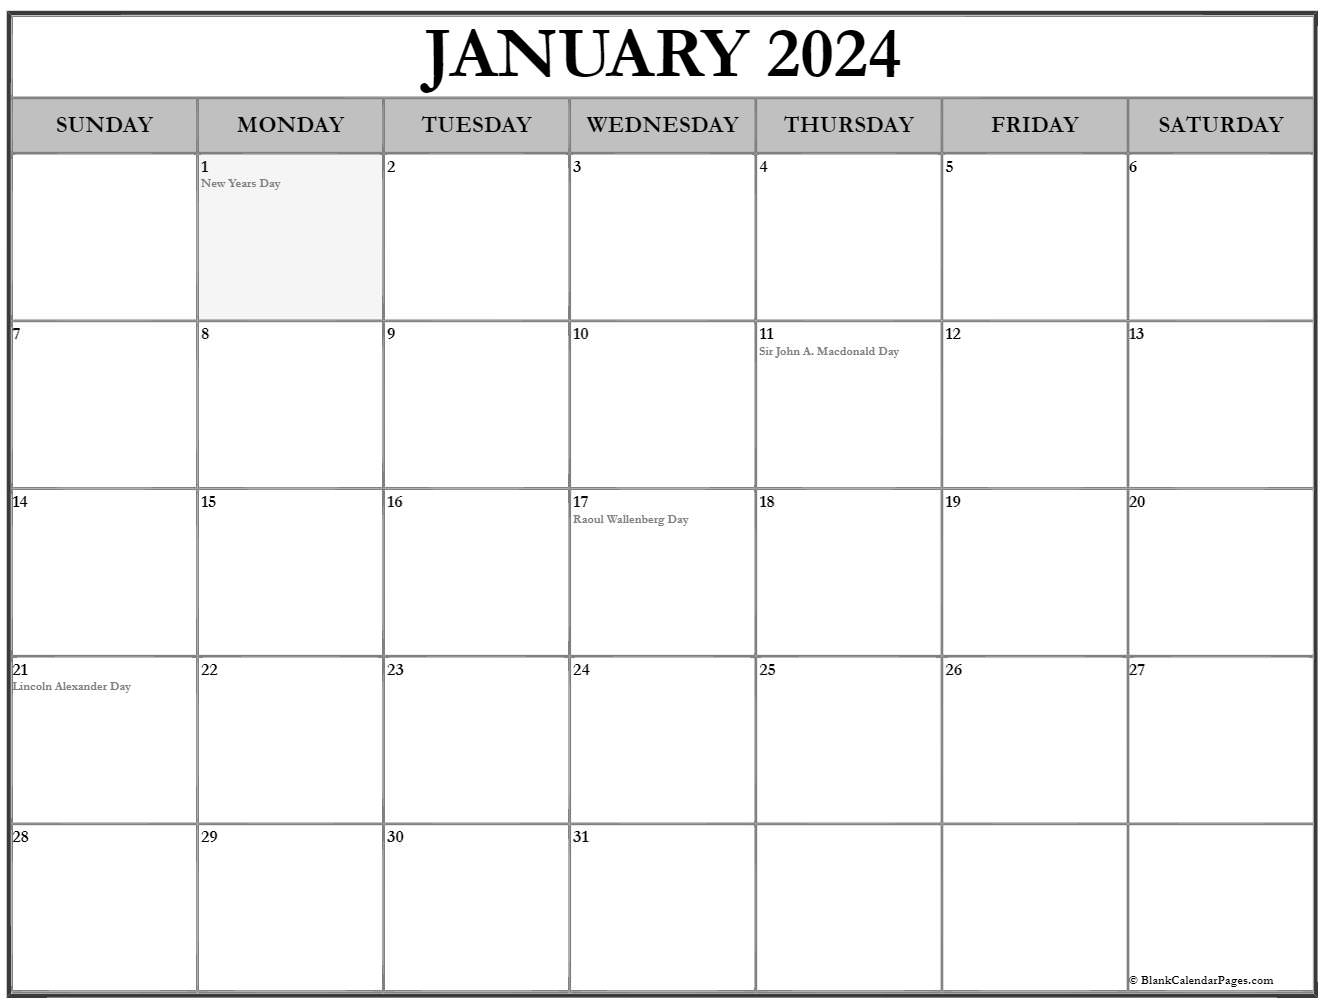 January 2020 calendar with holidays